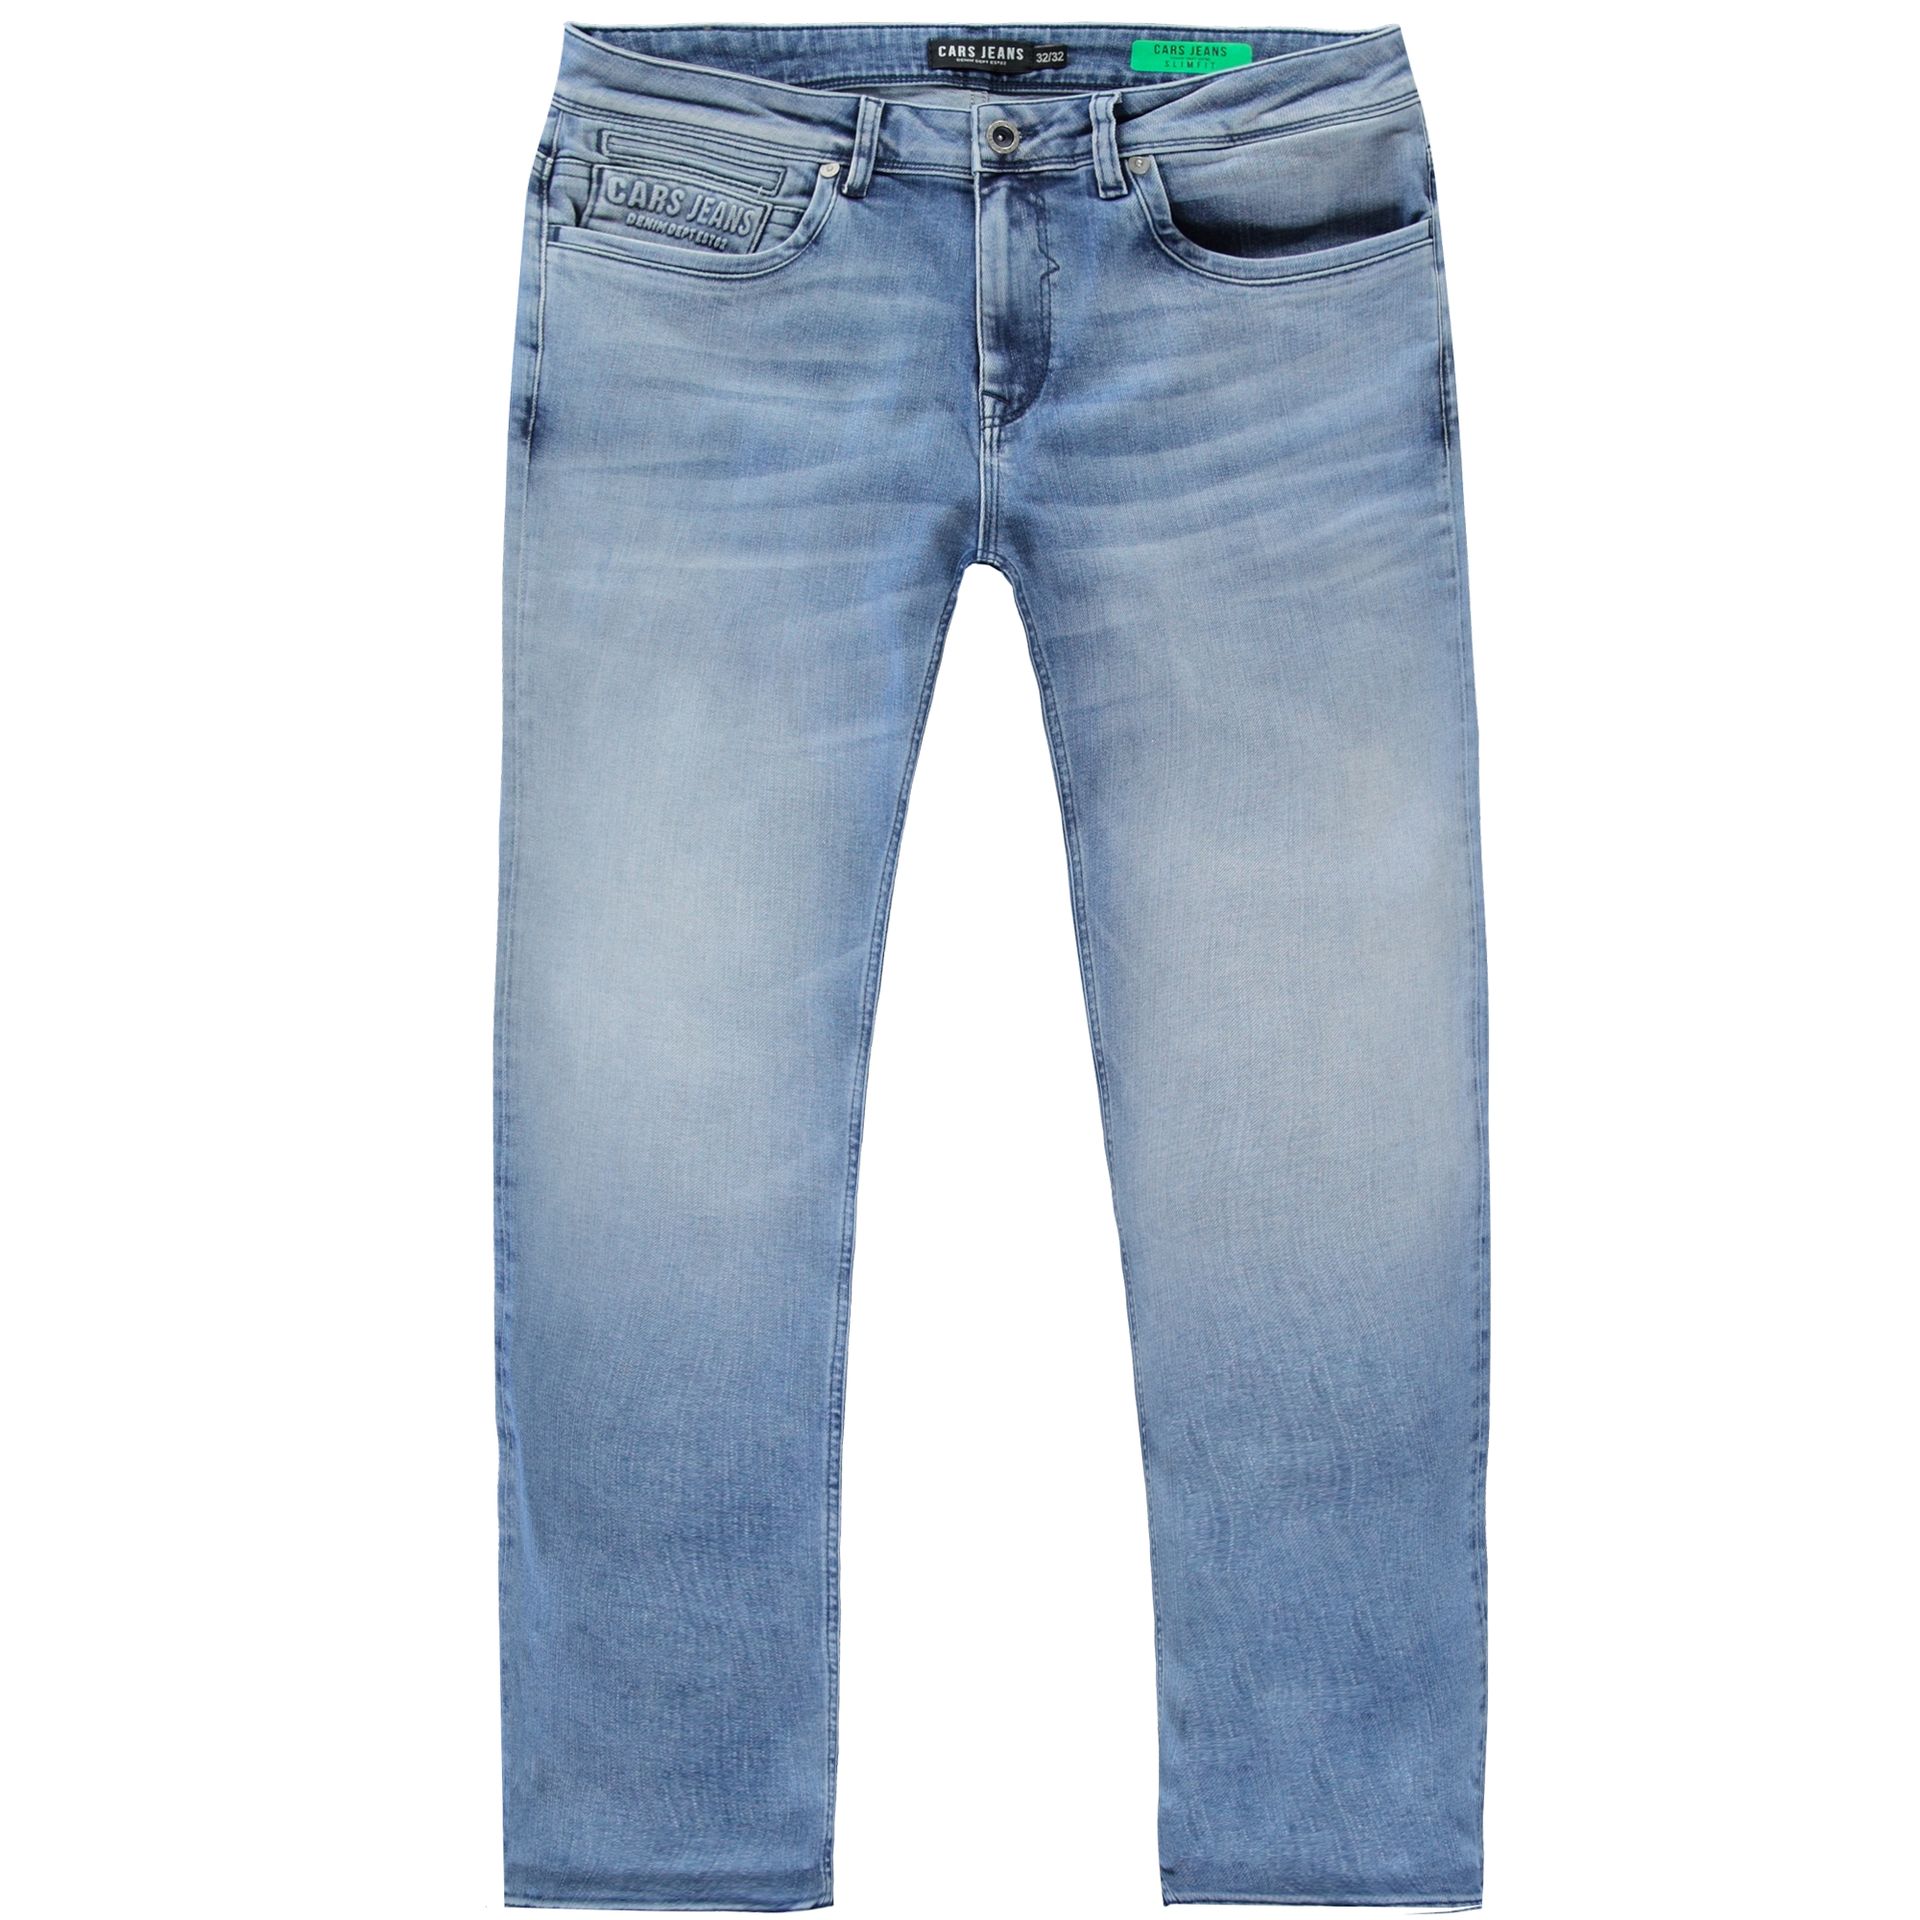 Cars jeans Jeans Blast Slim Fit 95 porto wash 00108285-EKA03000200000021